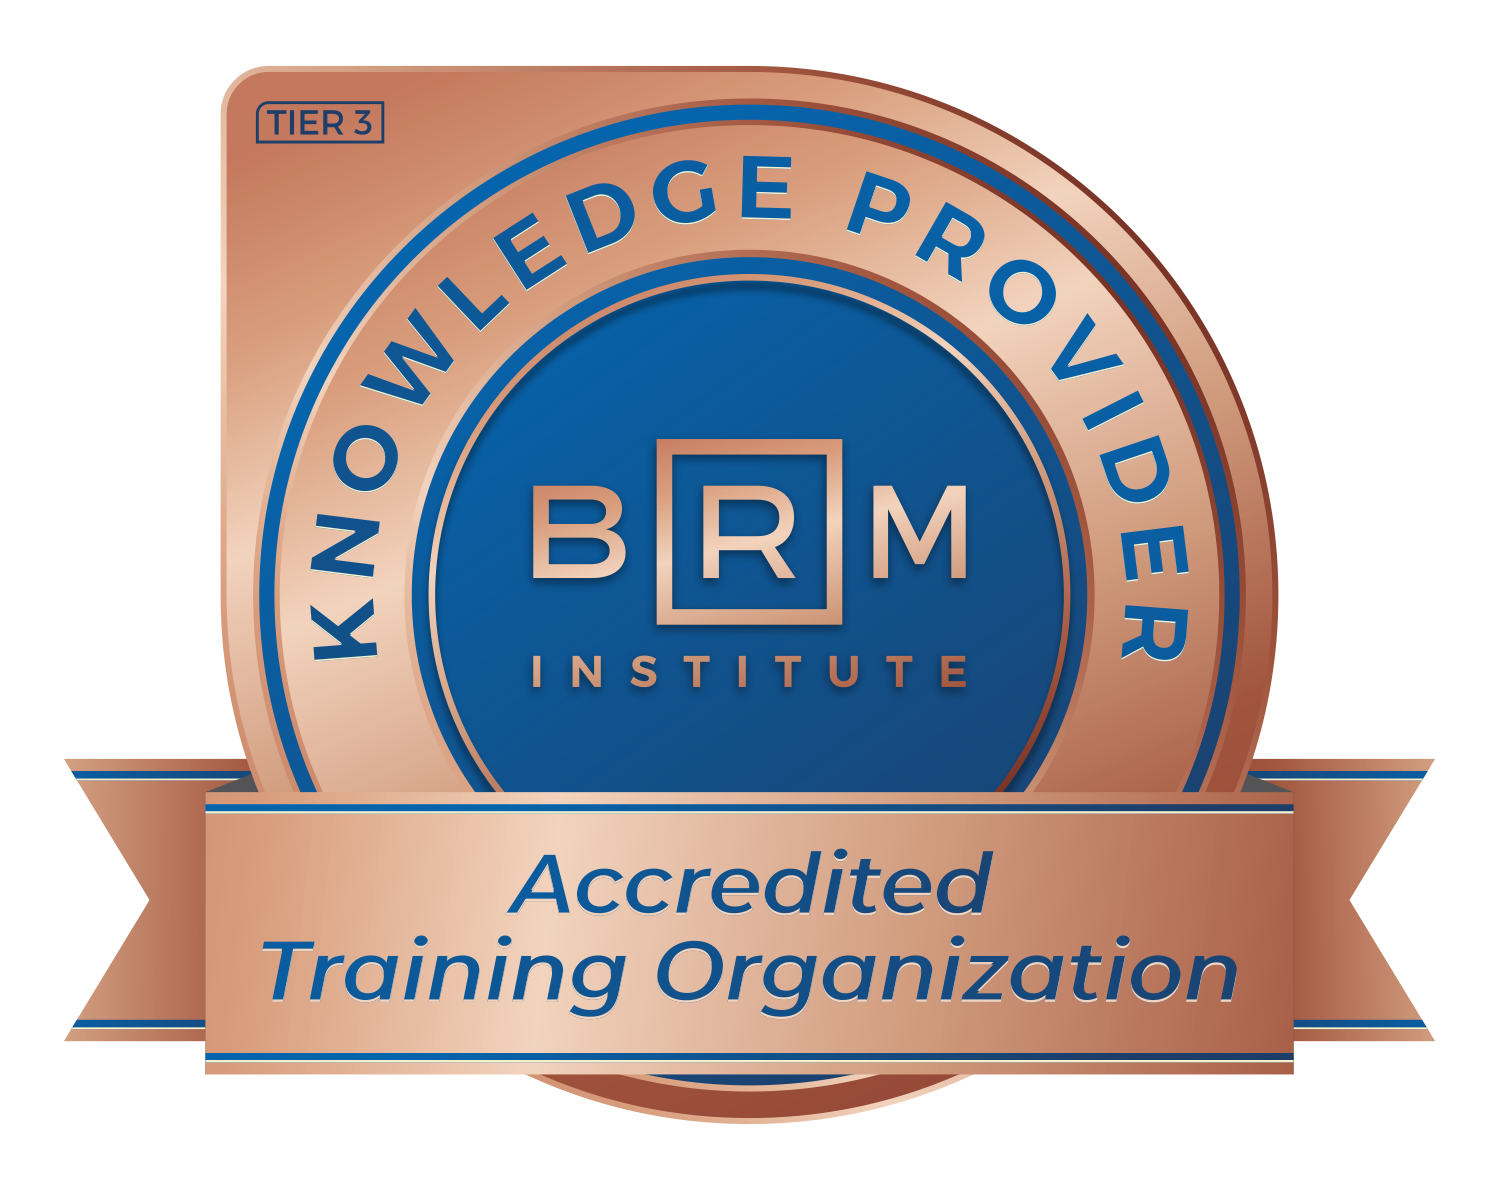 Tier 3 Knowledge Provider Training Organization